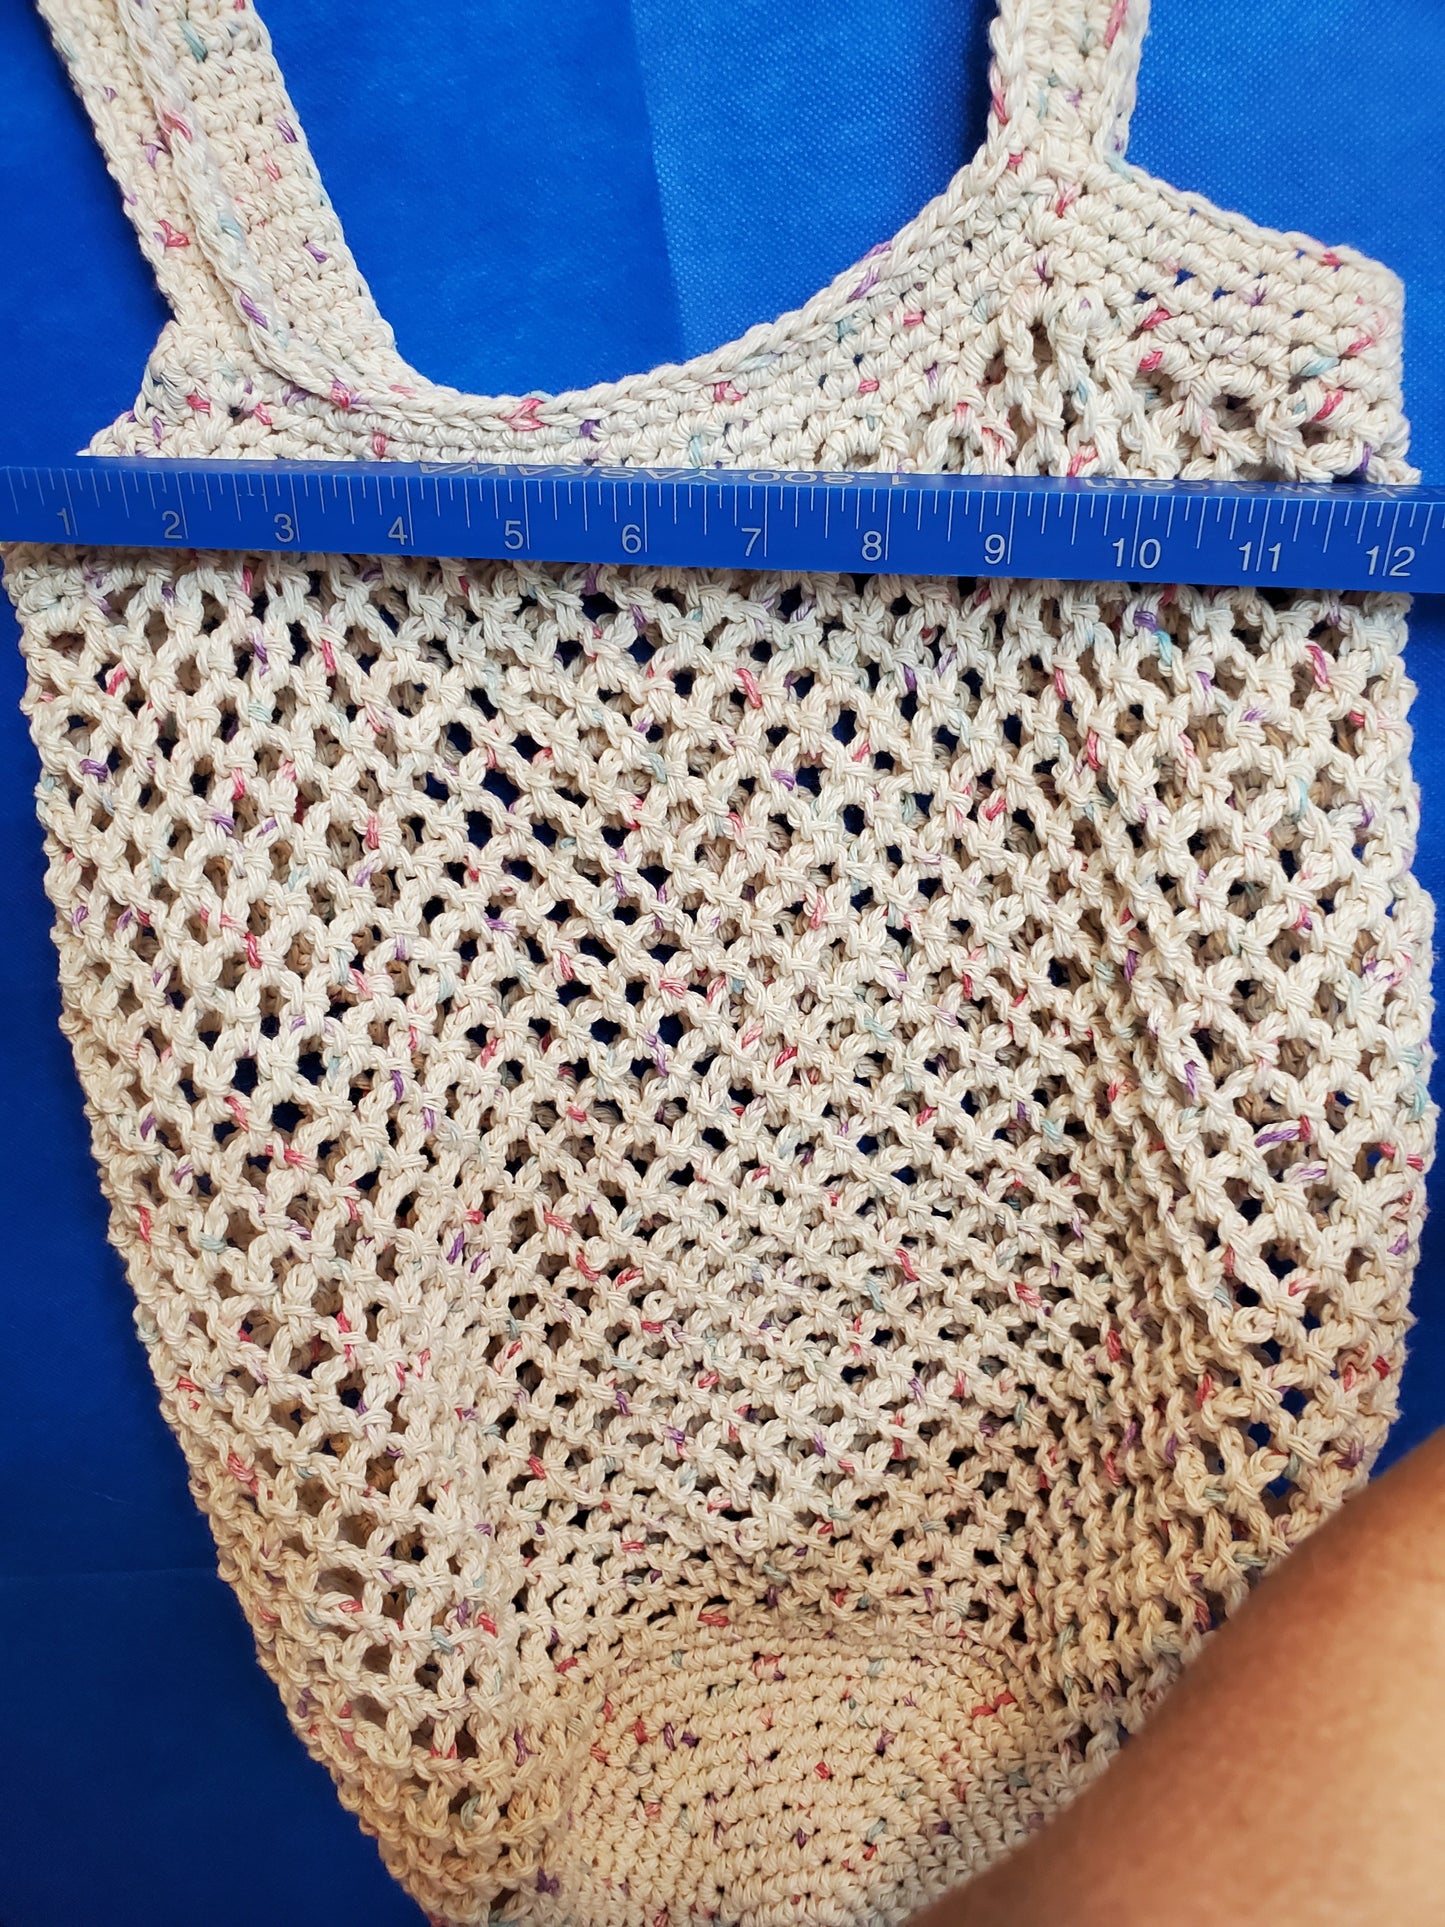 Market Bag / Crocheted Bag / Off white with color flecks